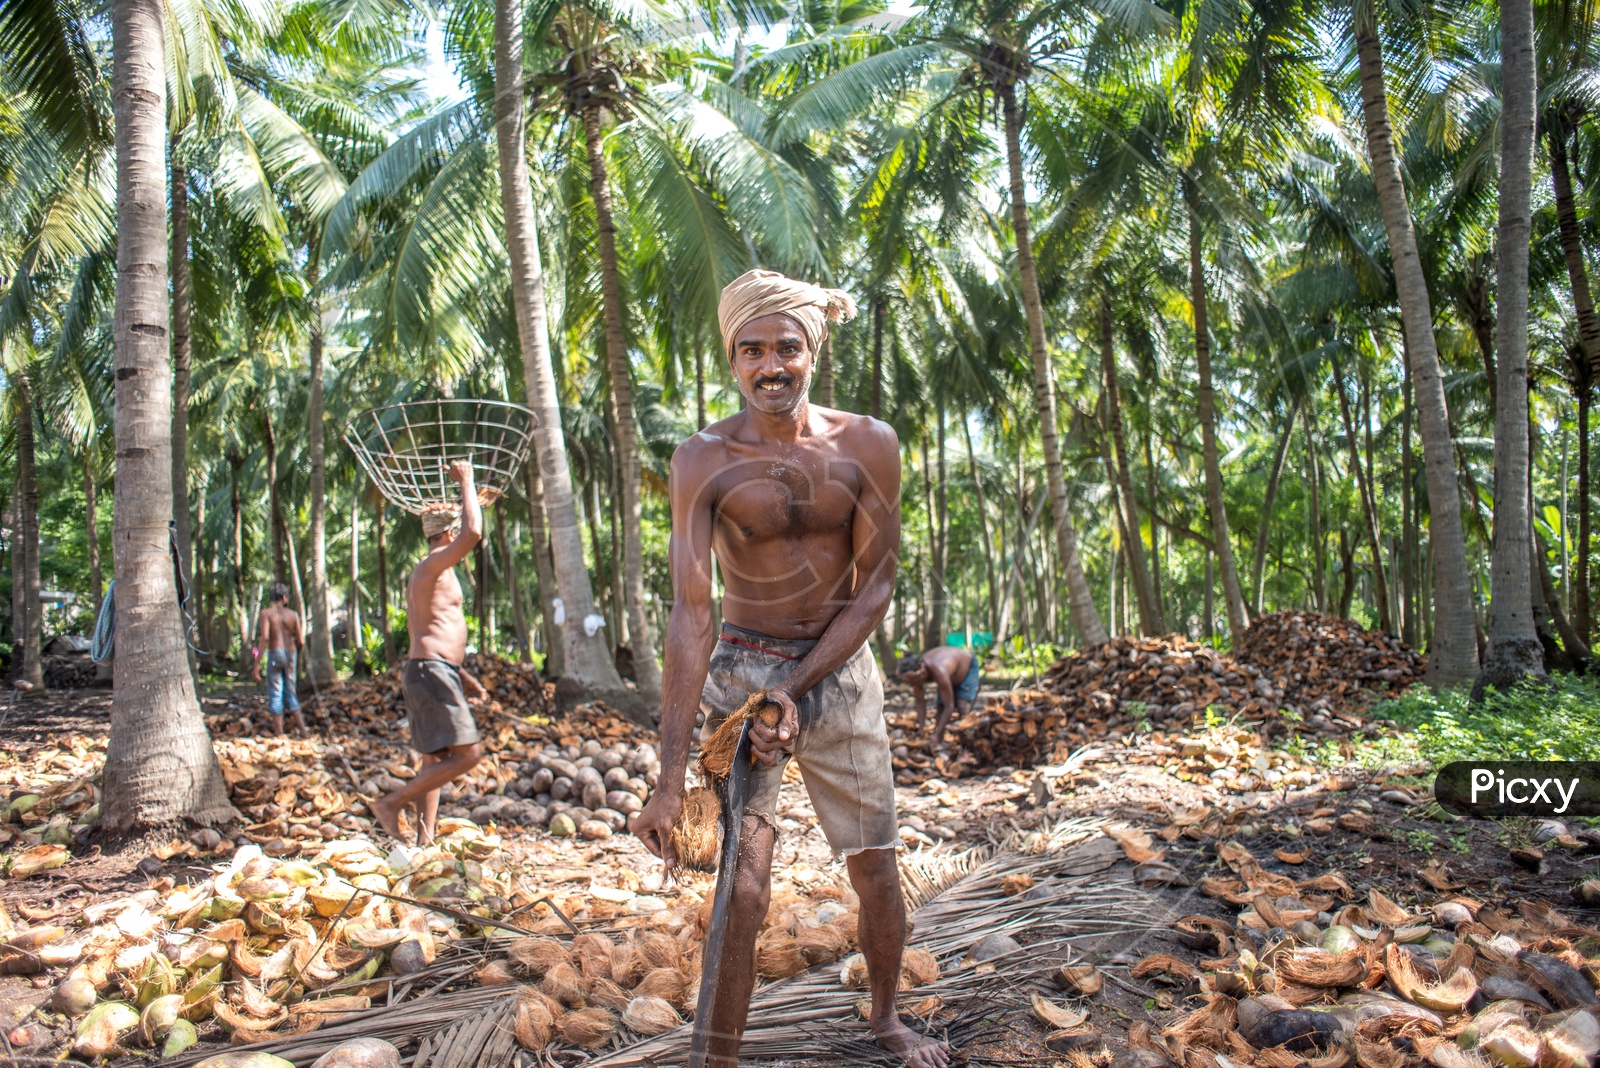 Farmers in coconut groves